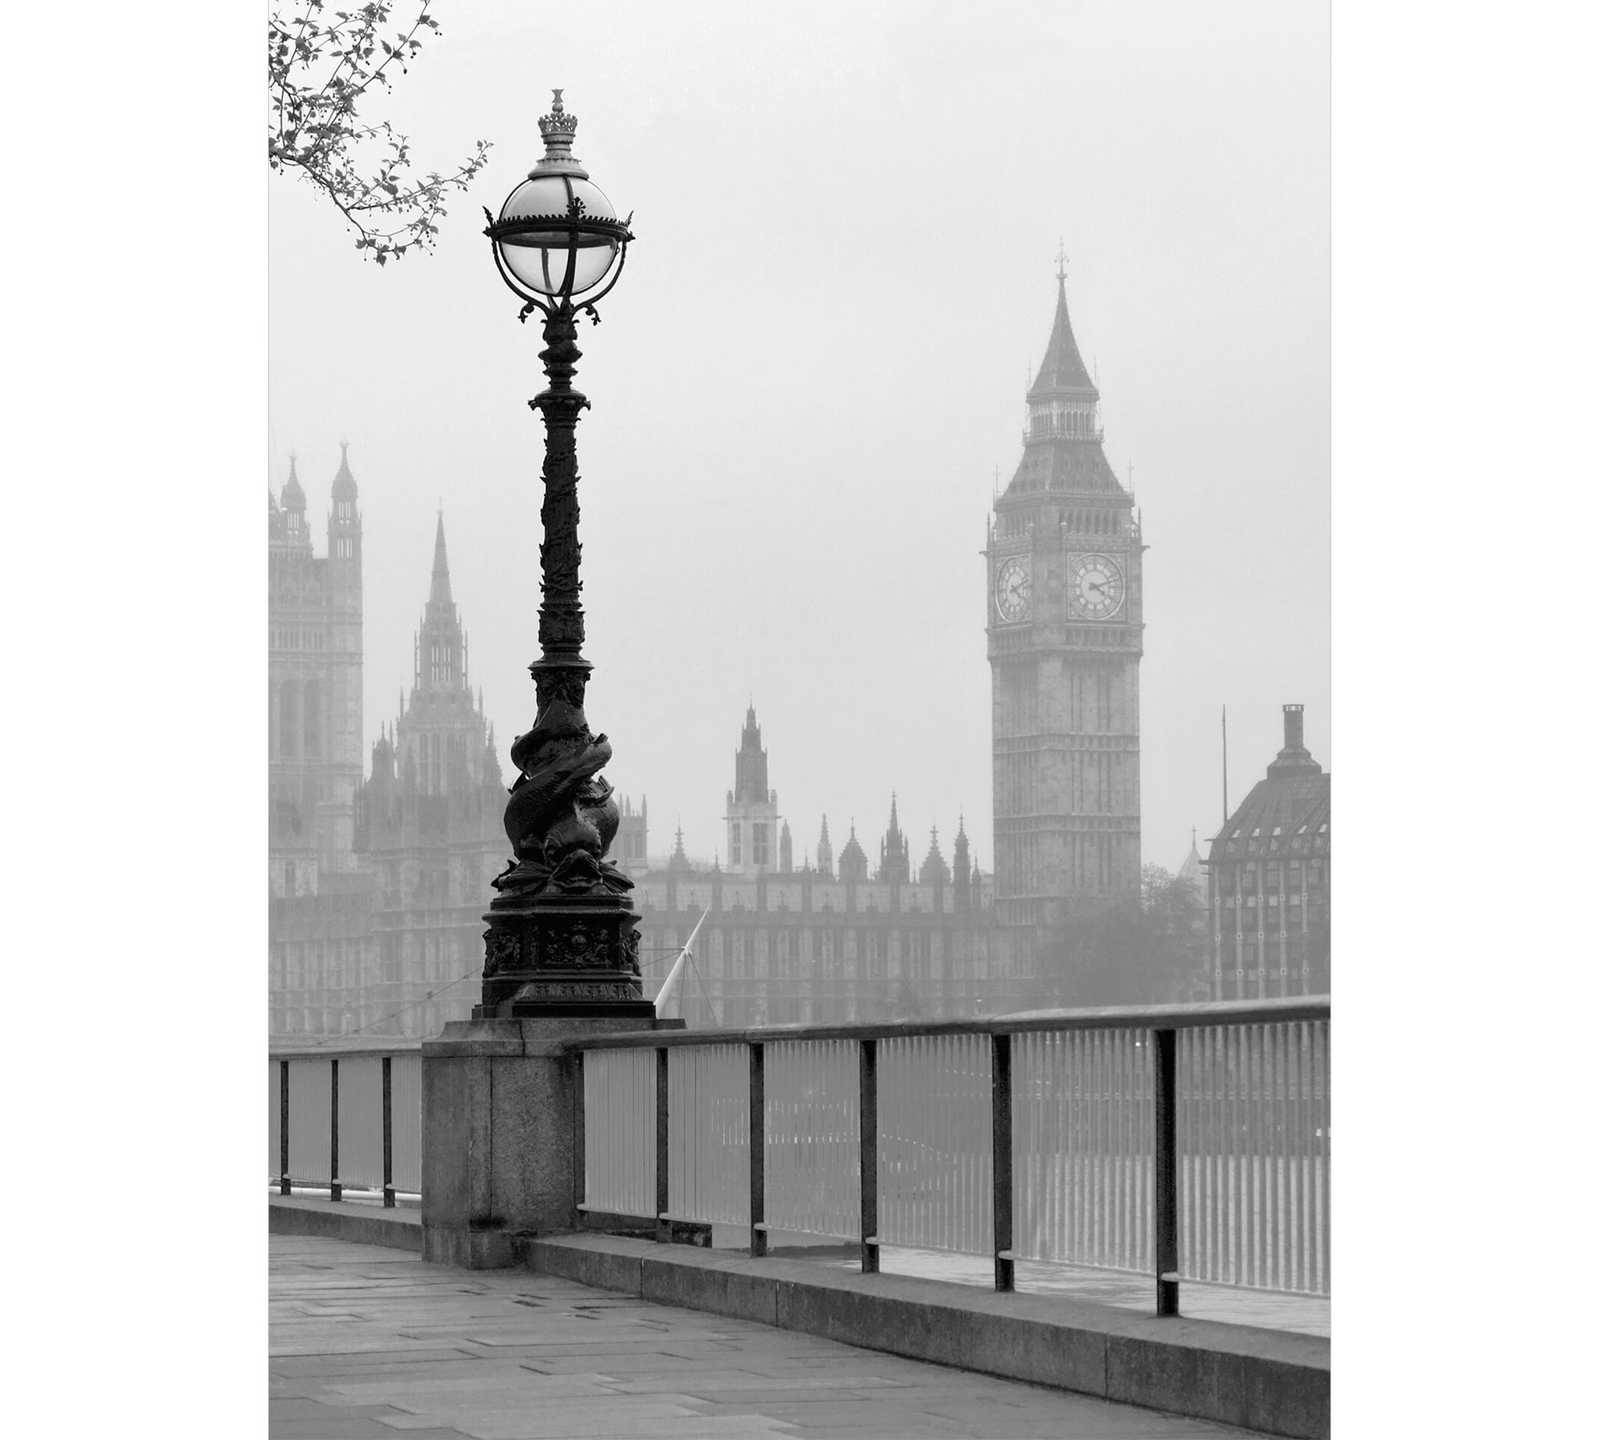         Photo wallpaper London city in the fog - black, white, grey
    